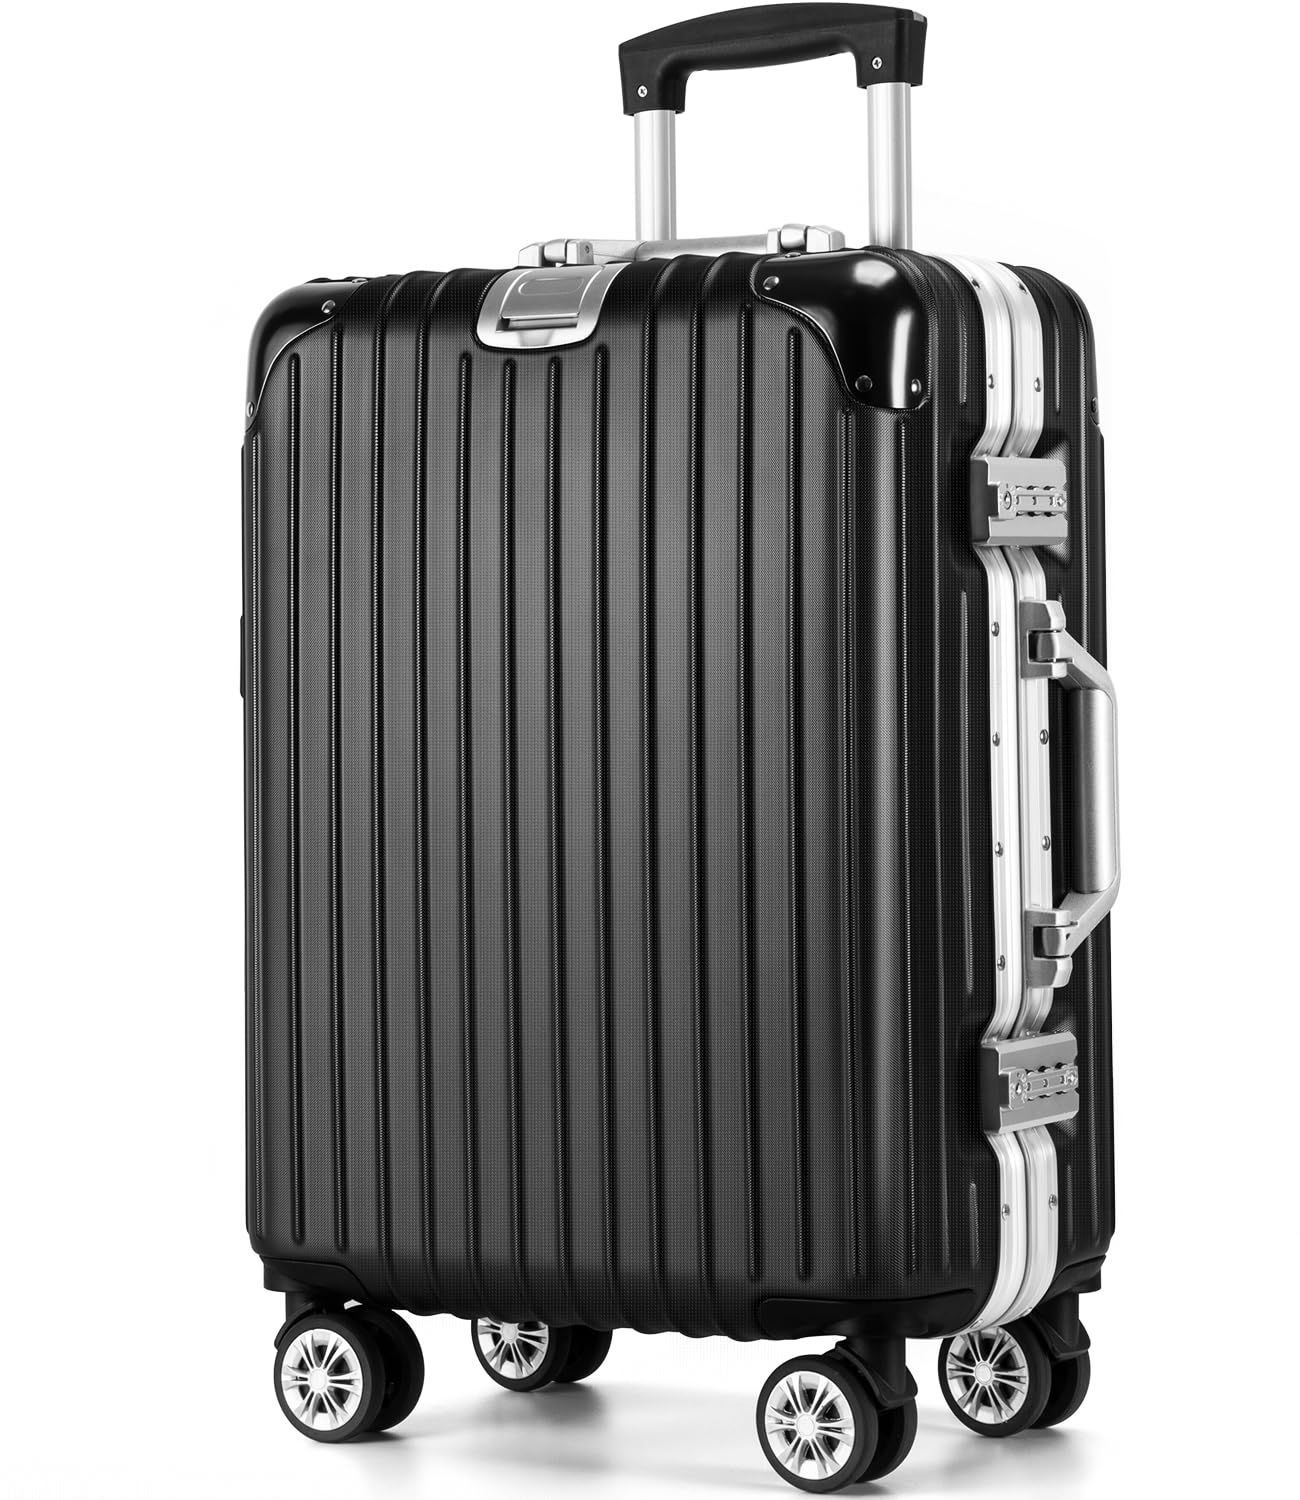 VARNICスーツケース 超軽量 耐衝撃、360°回転、TSAロック、ジッパー付 